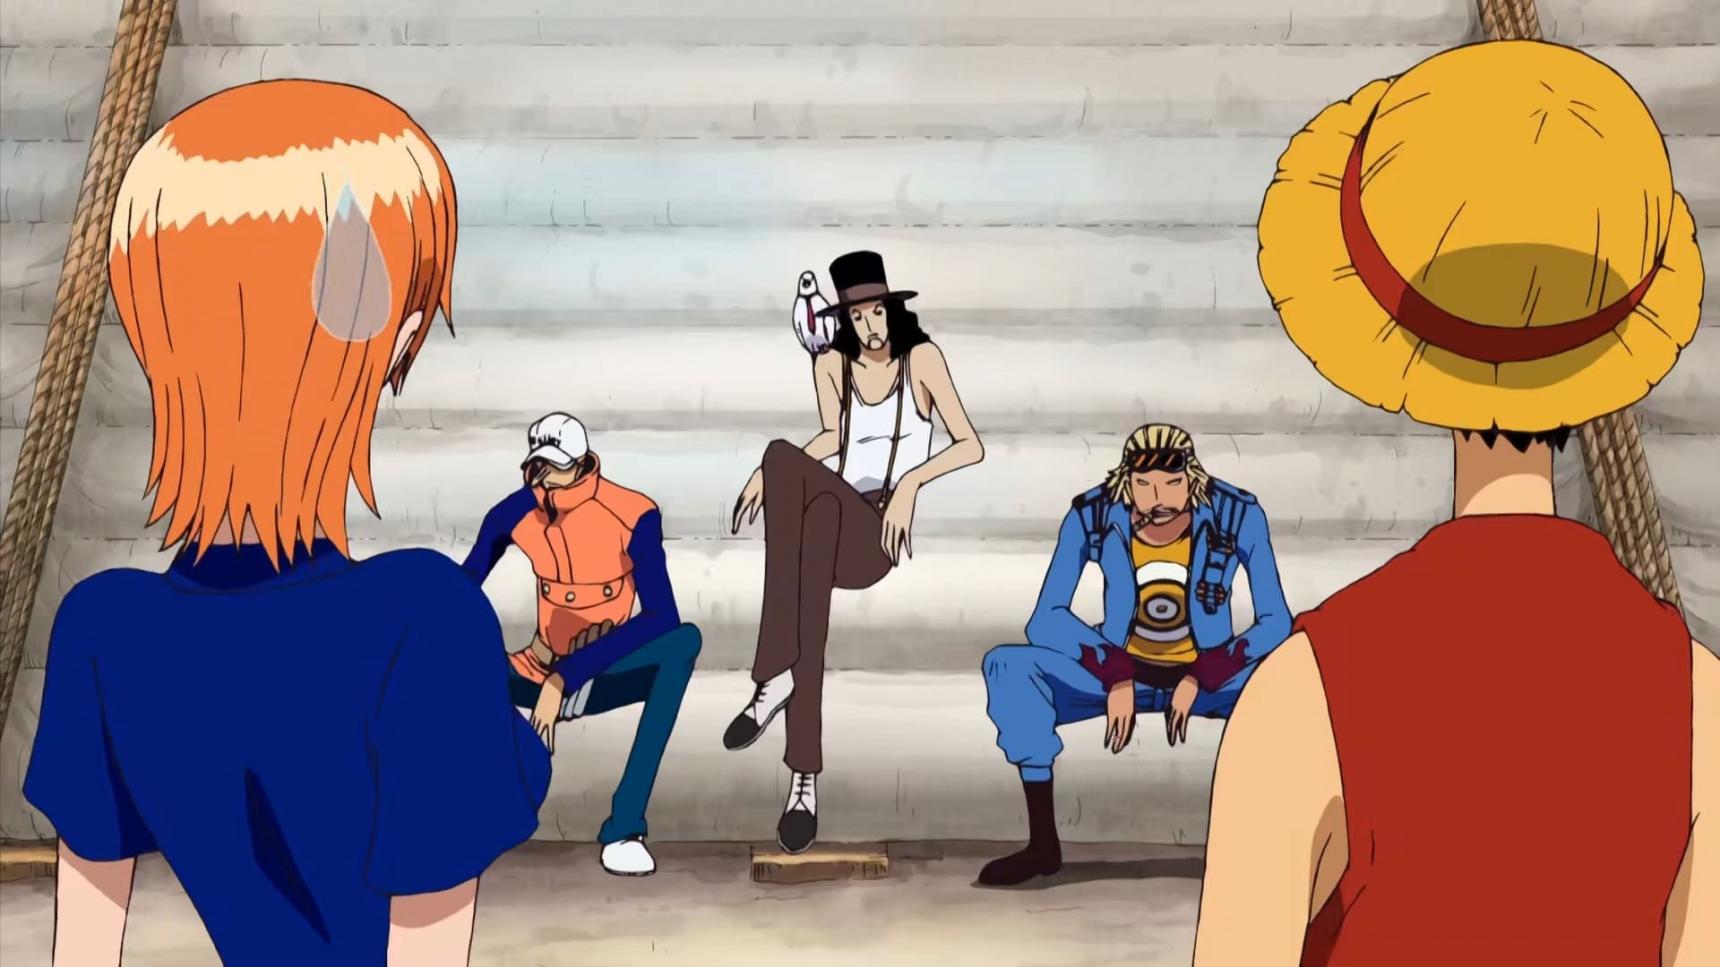 Poster del episodio 233 de One Piece online